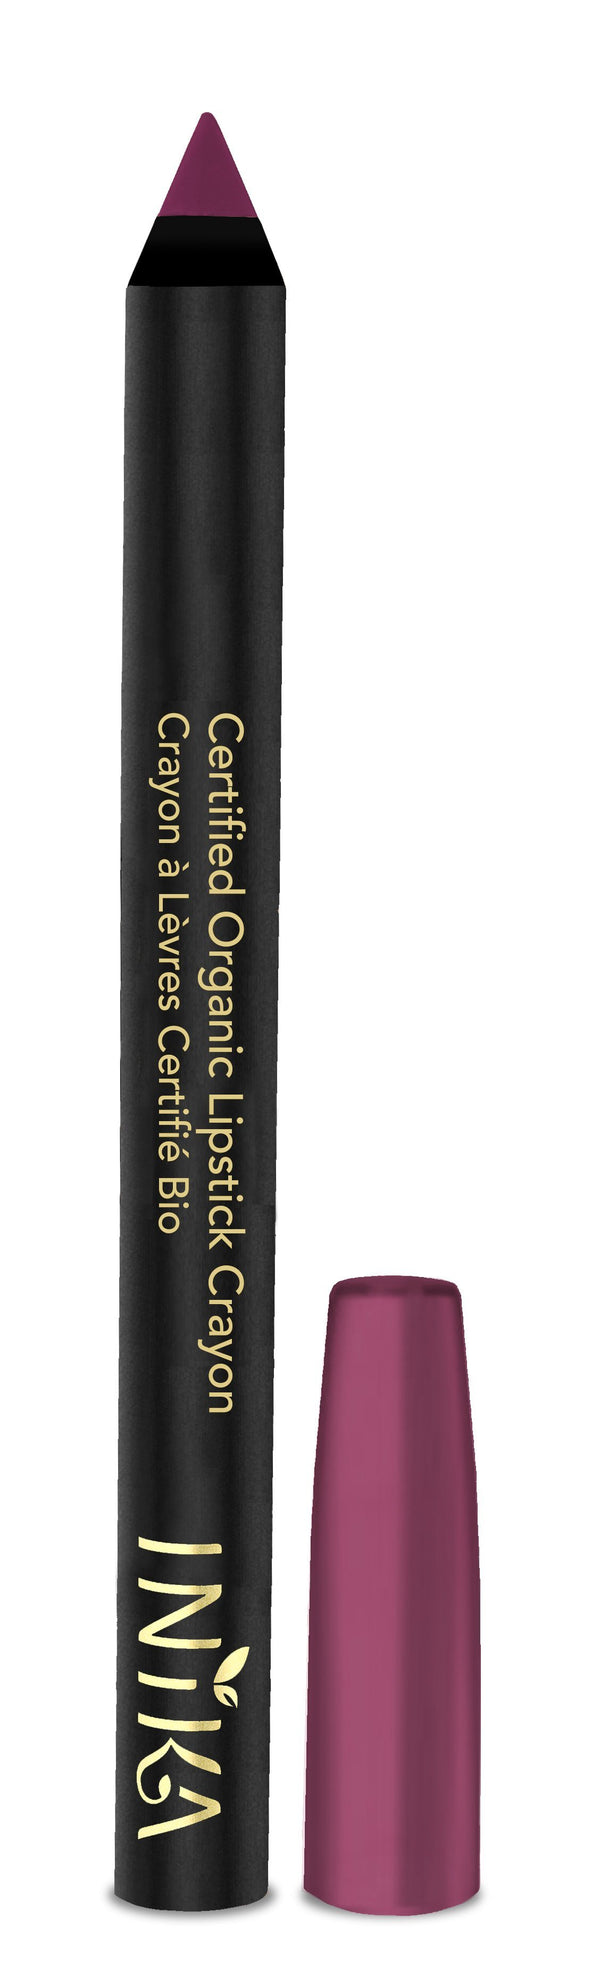 Inika Certified Organic Lipstick Crayon Natural Makeup Total Beauty Network 